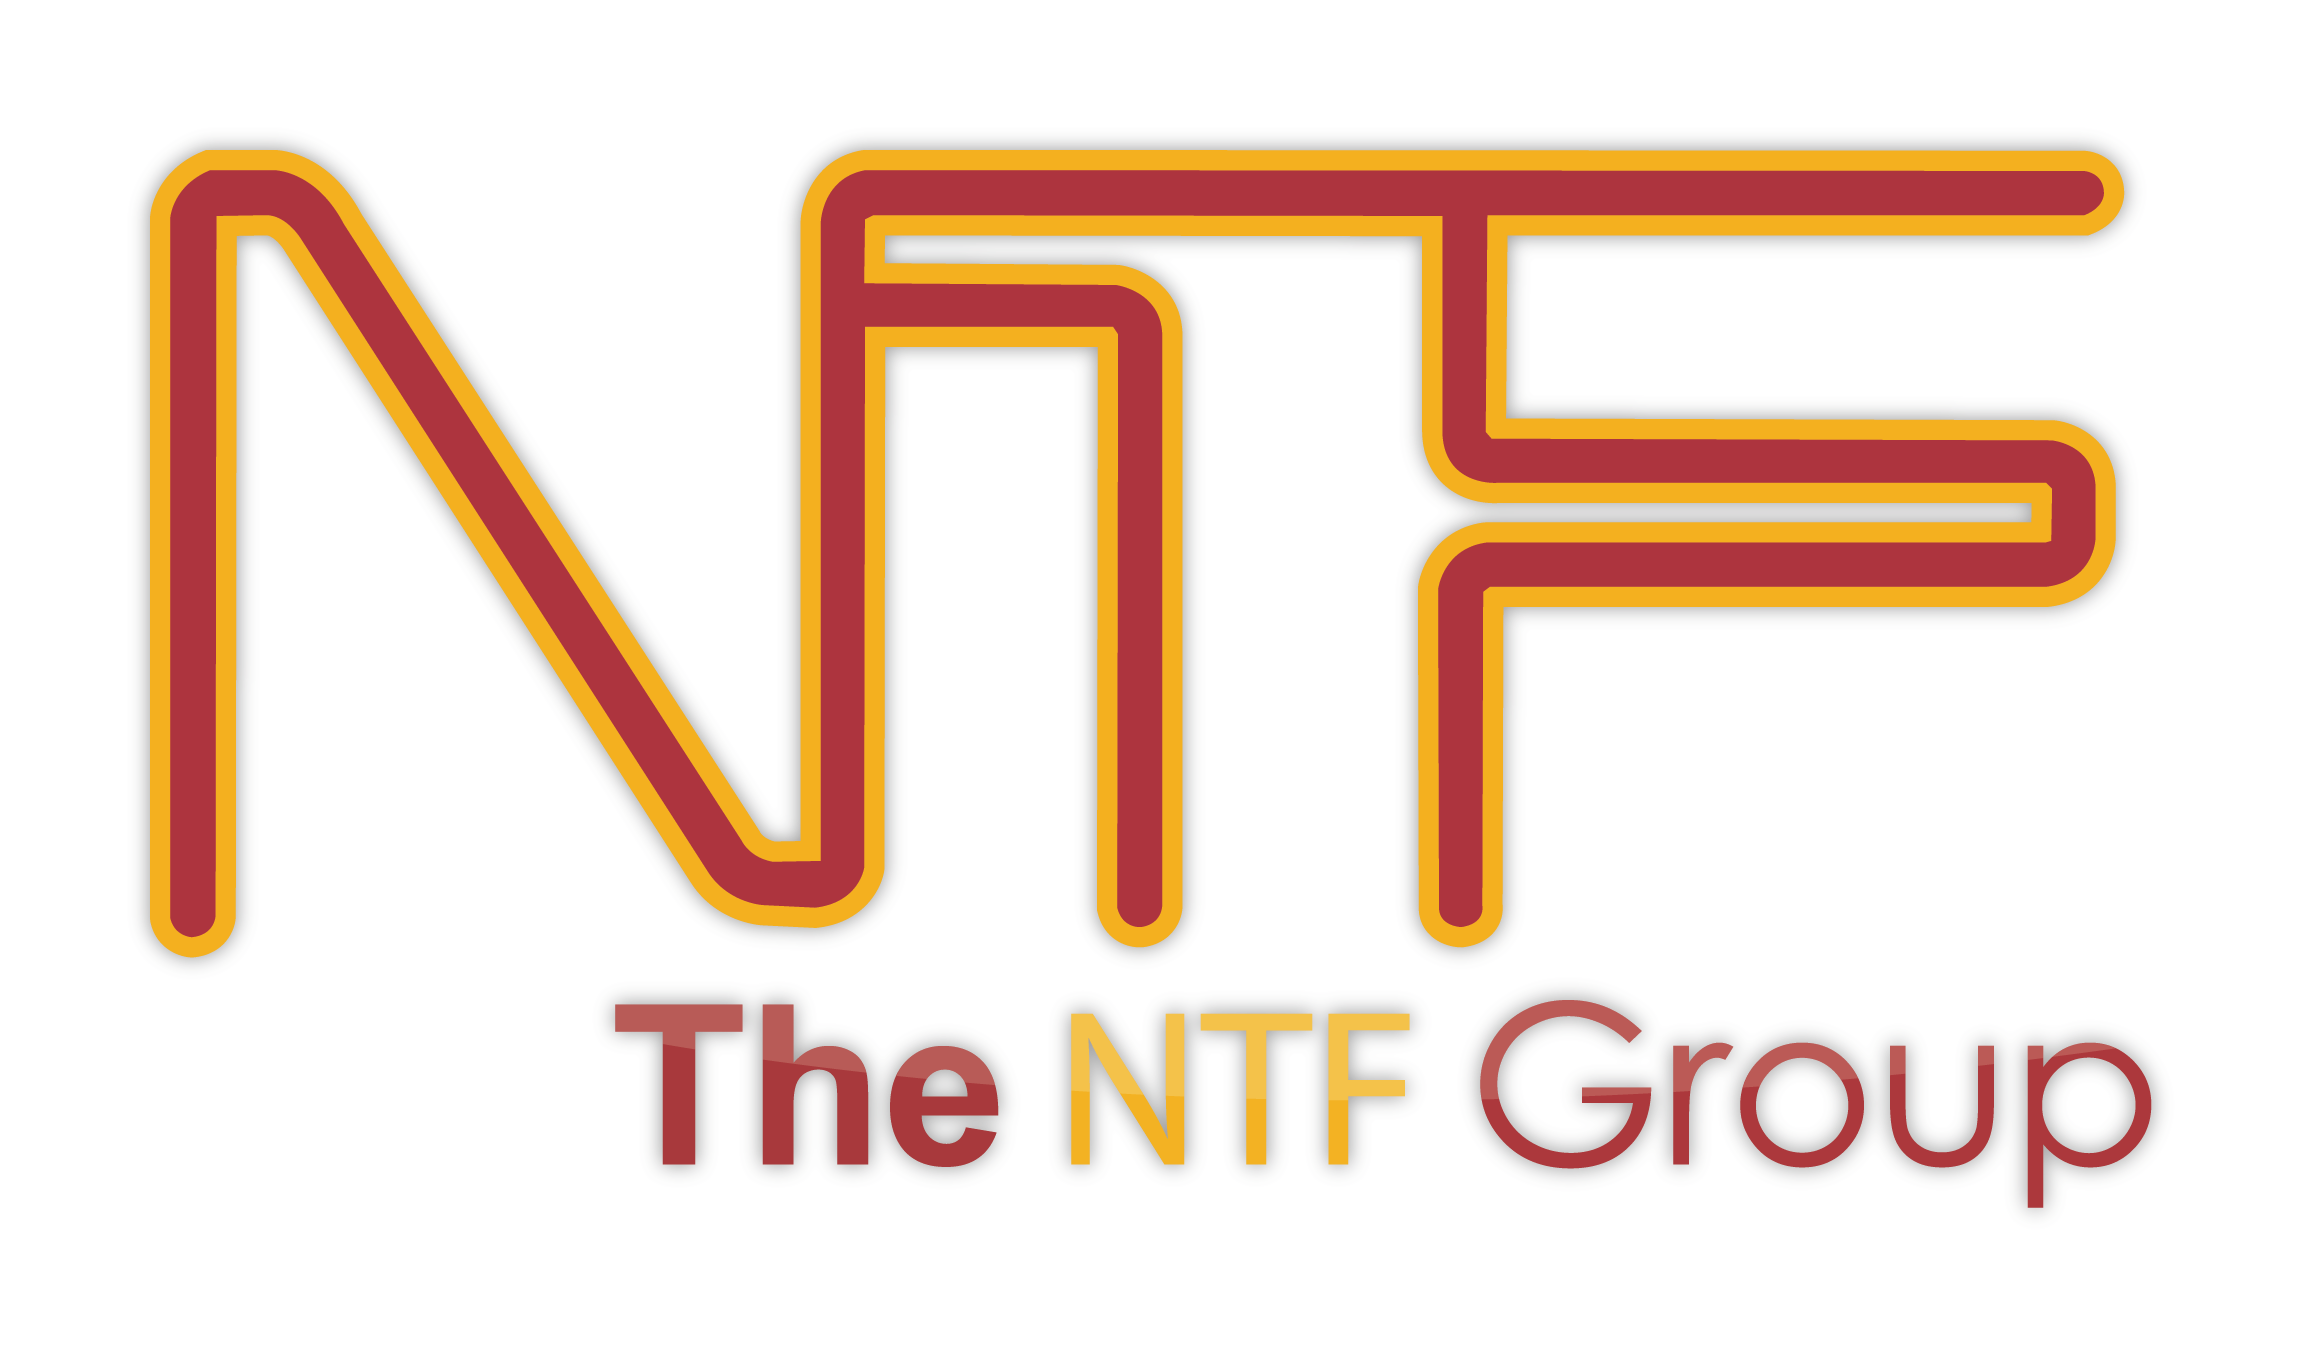 The NTF Group logo